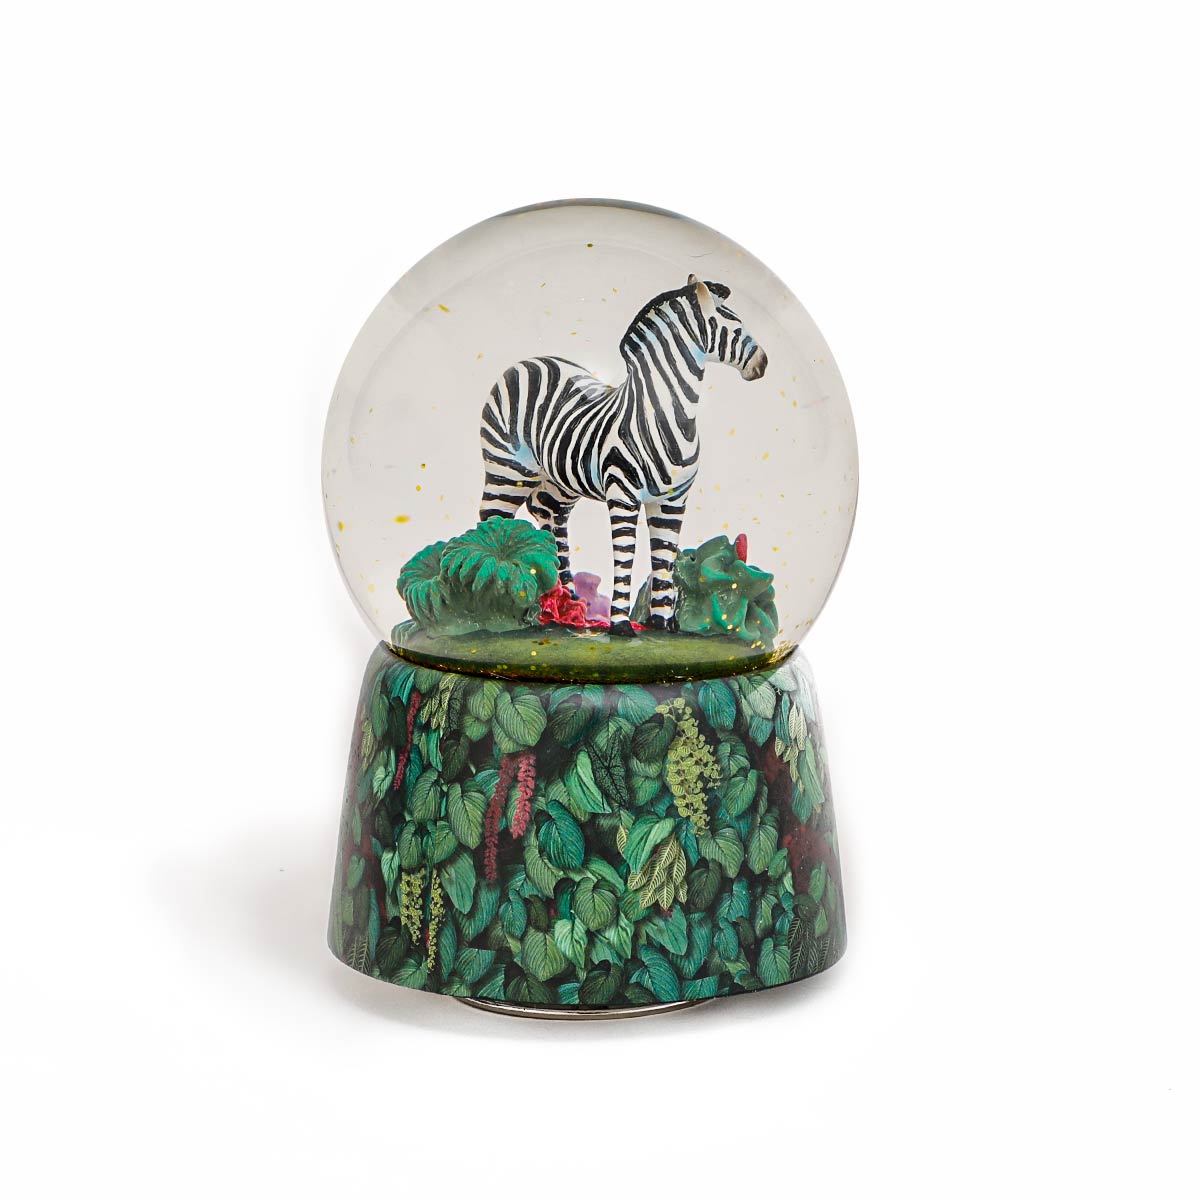 Musicboxworld Glitter Globe 100 mm with a Zebra